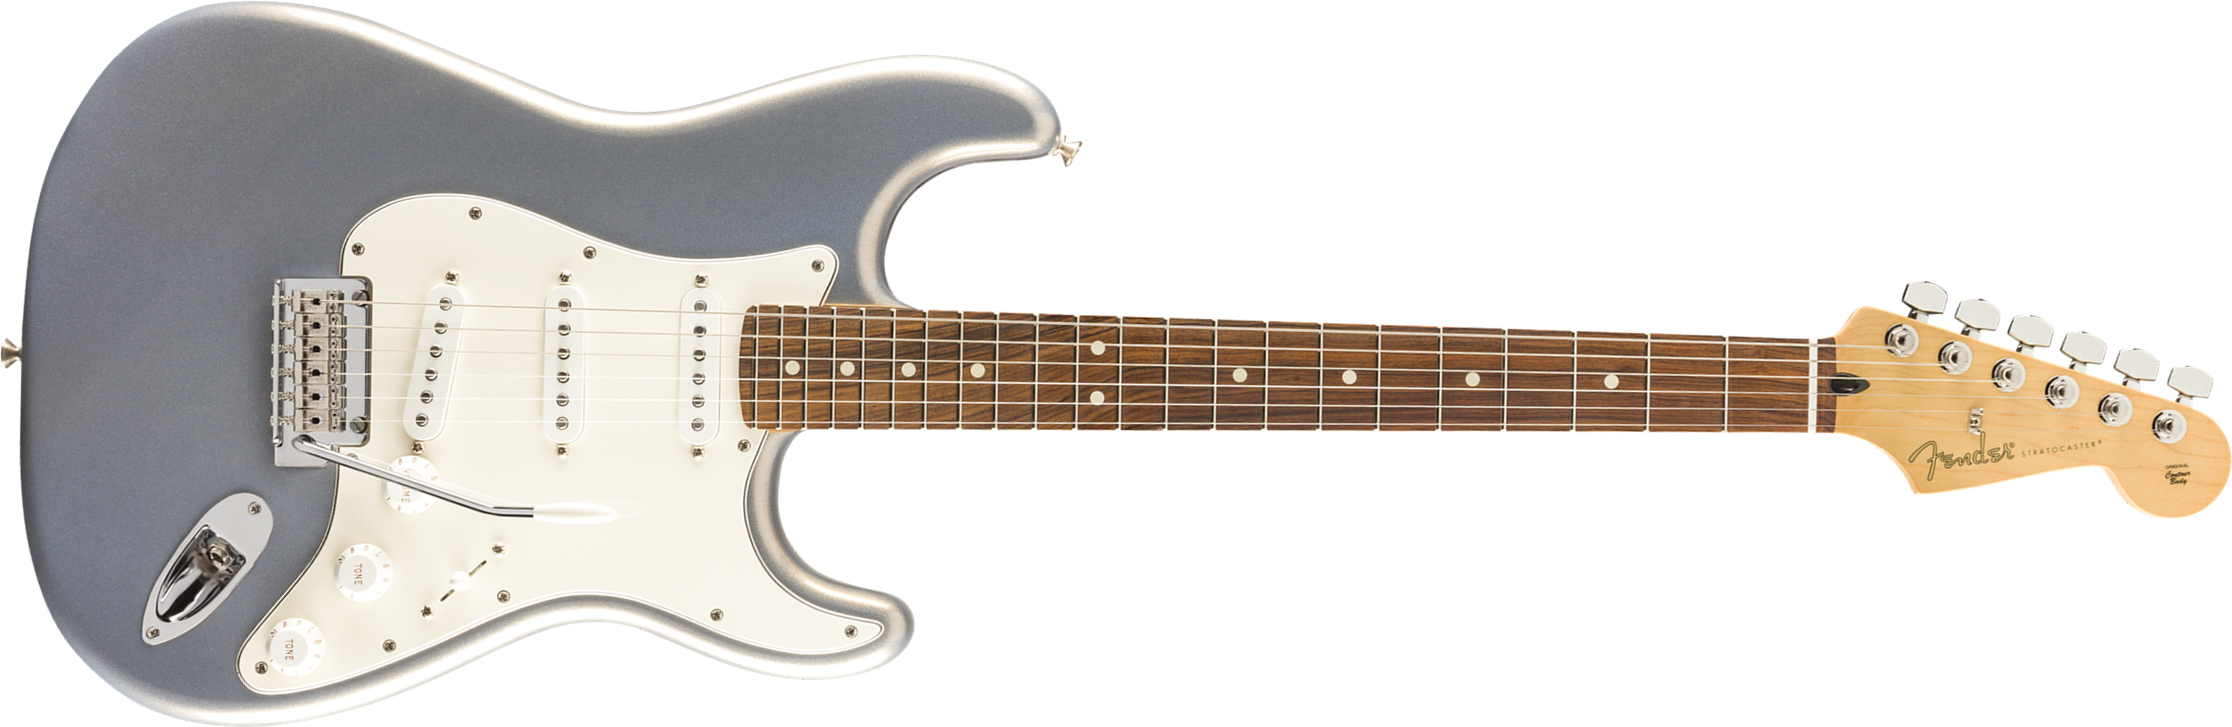 Fender Strat Player Mex 3s Trem Pf - Silver - Str shape electric guitar - Main picture